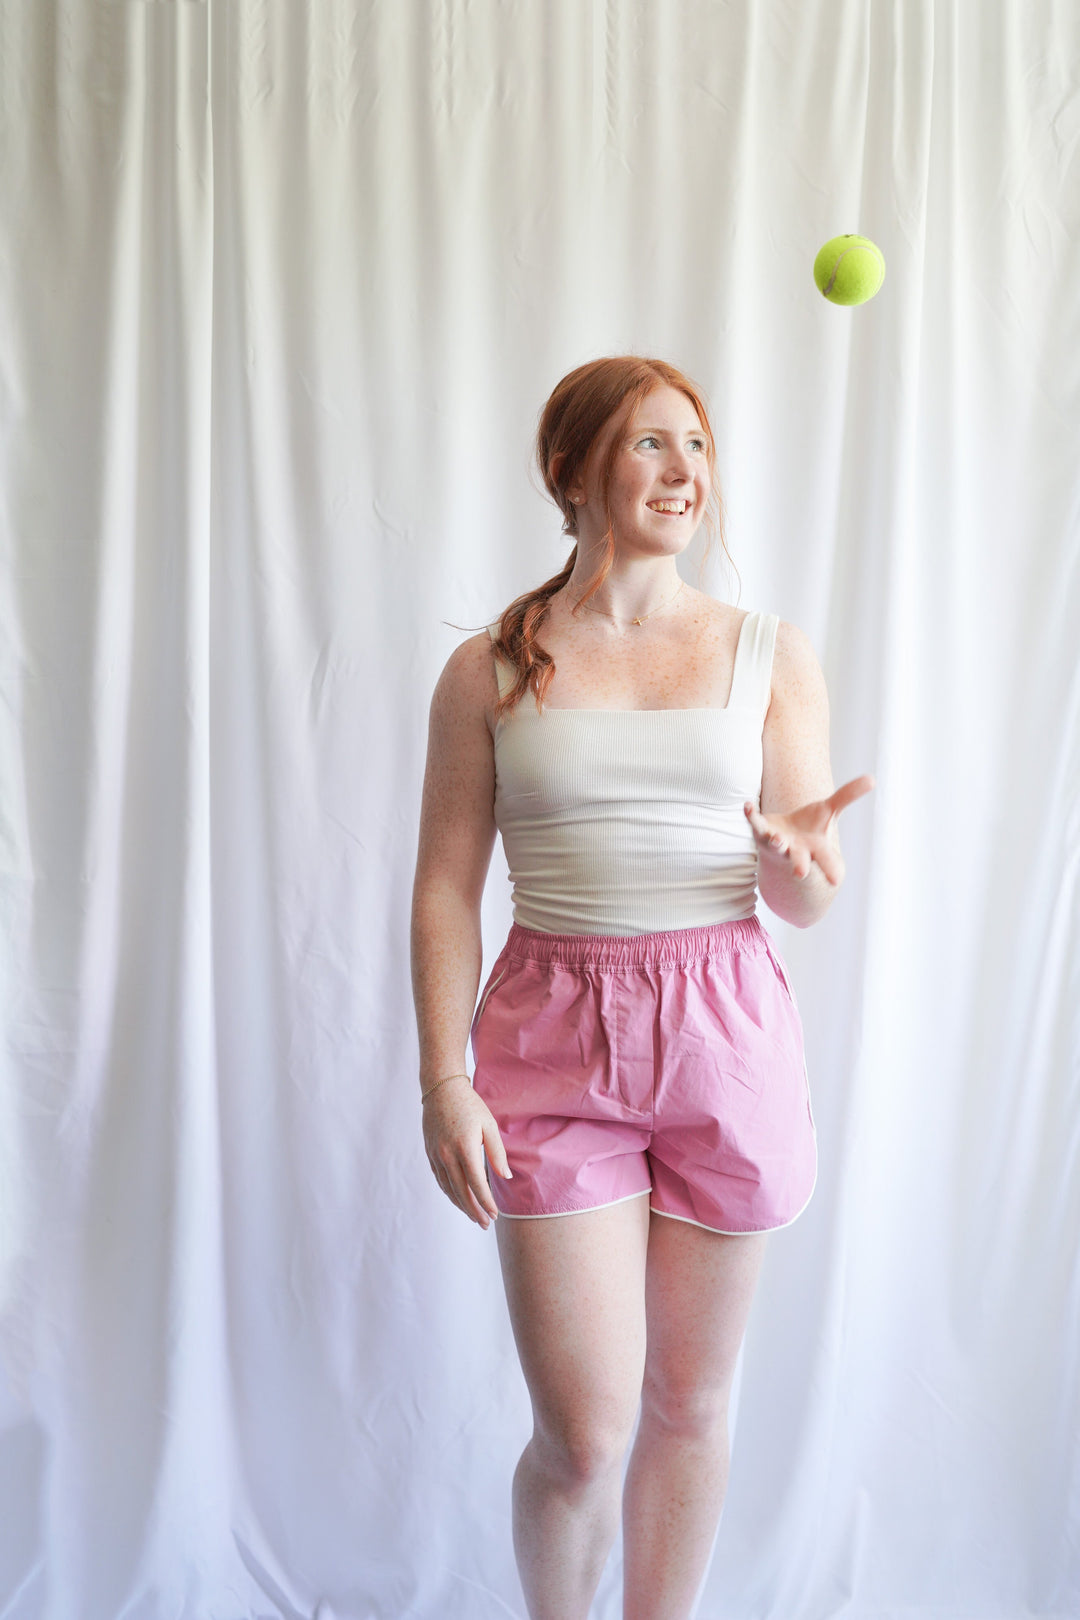 Girl wearing pink tennis shorts with white basic top.  